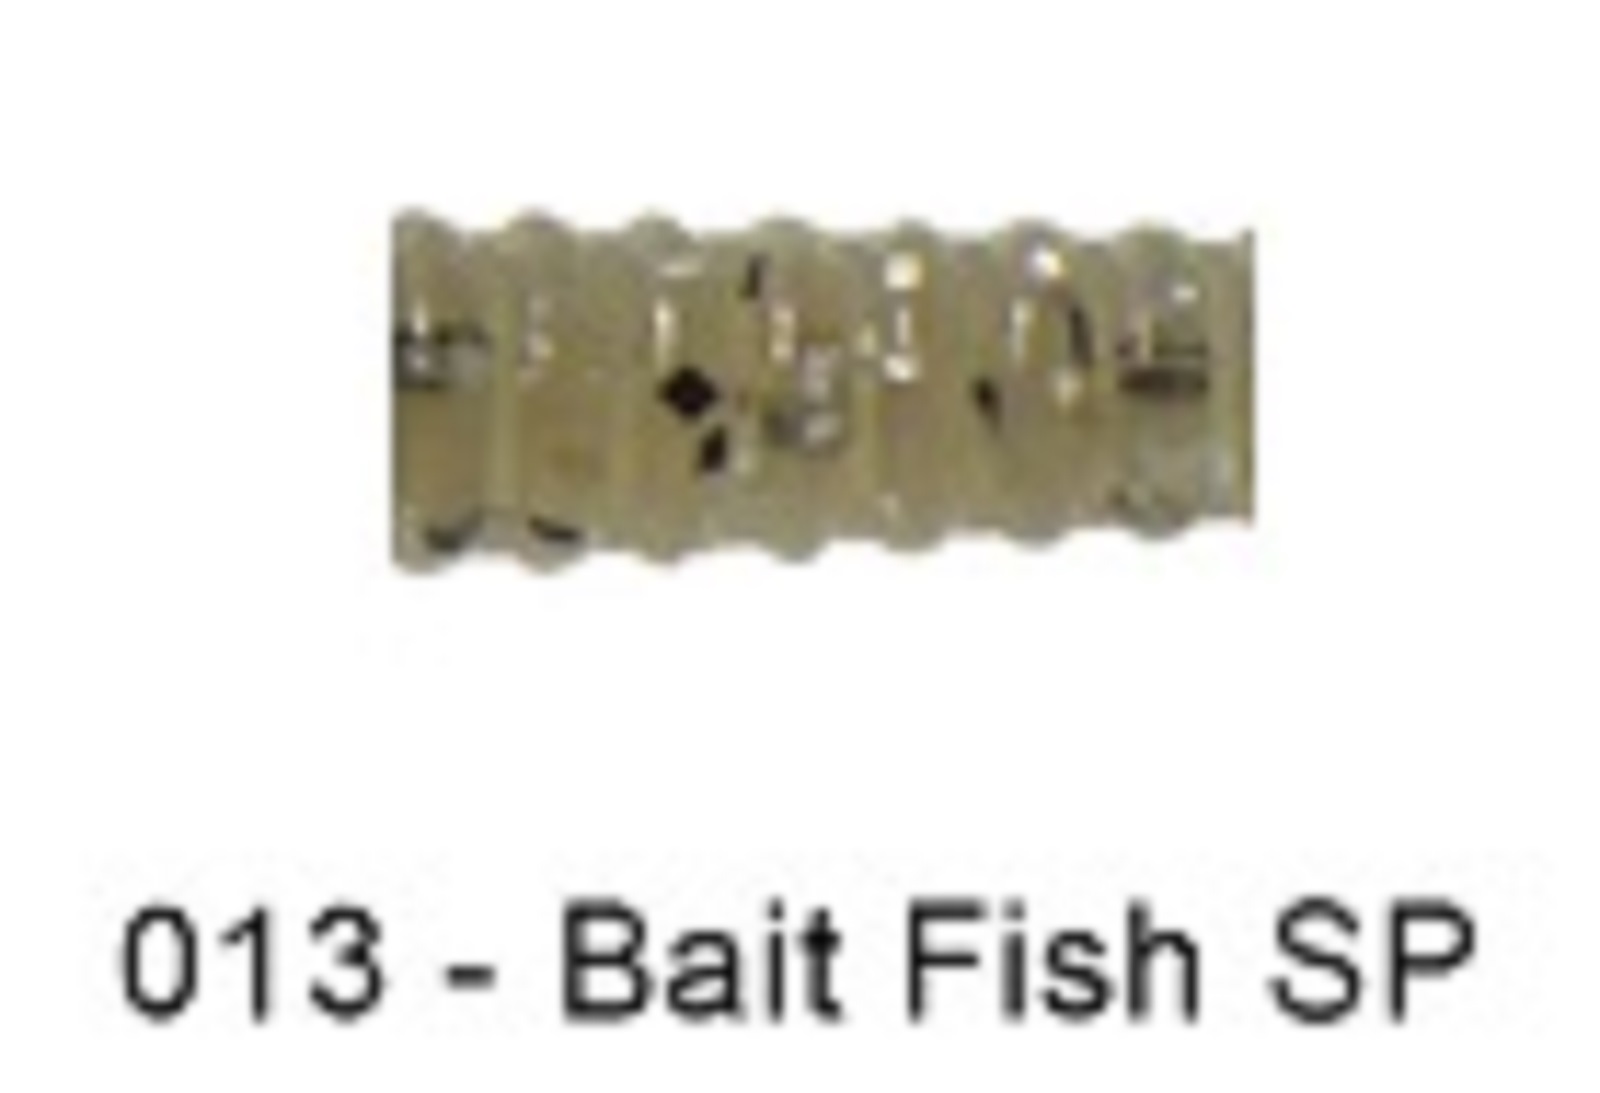 Softbait Reins Cross Swamp 4” col. #013 - Bait Fish SP